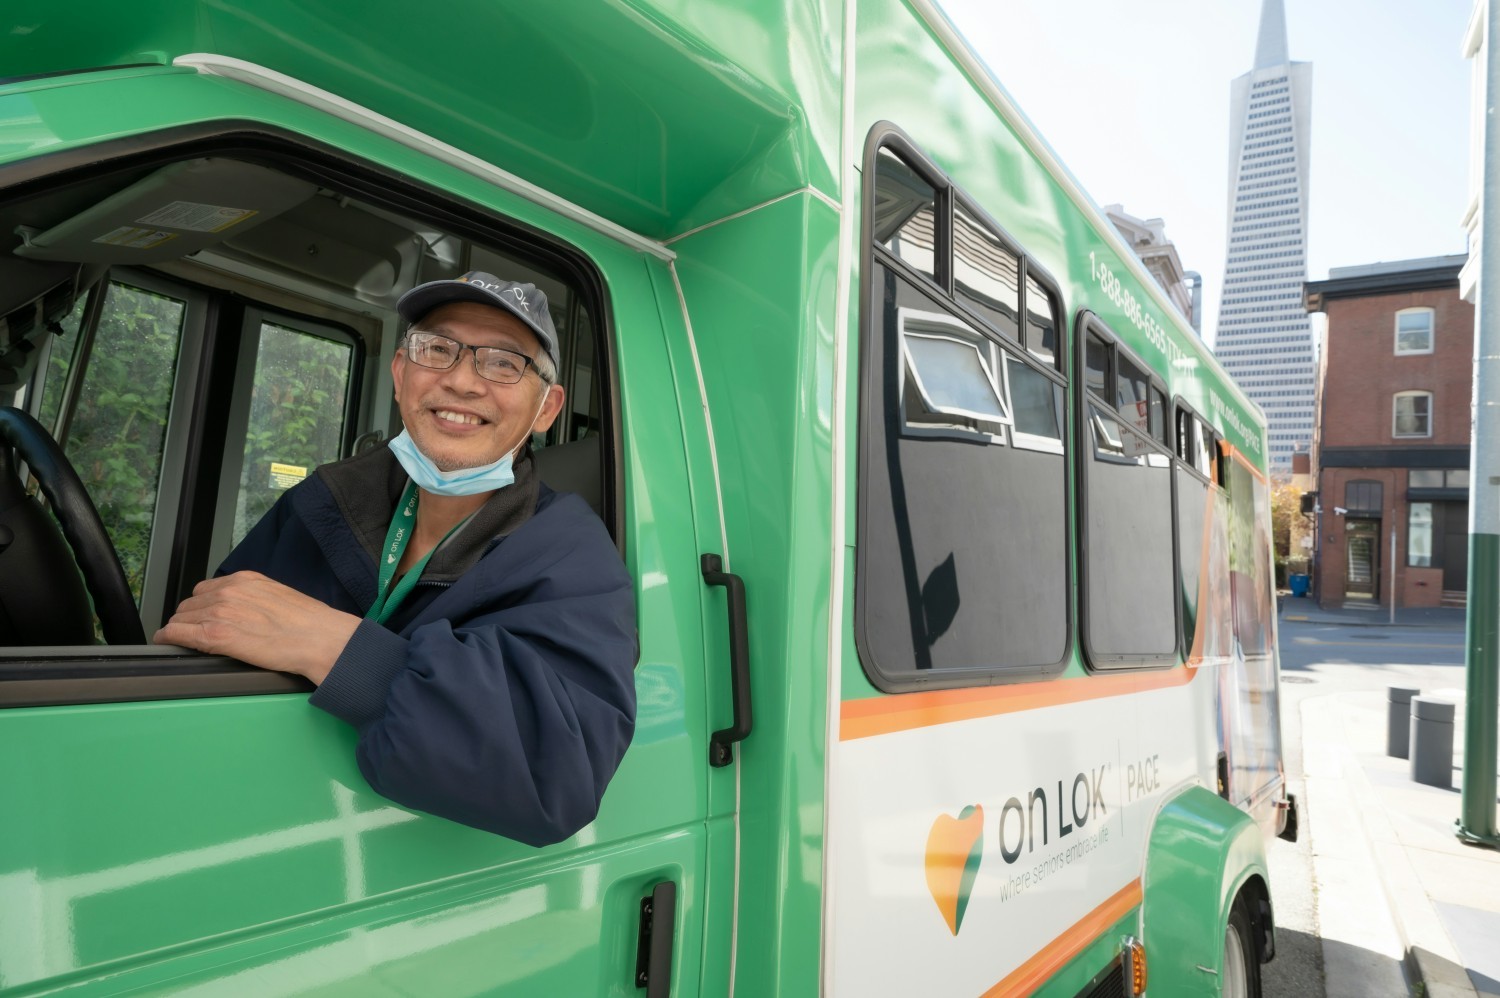 On Lok PACE driver provides transportation for seniors.